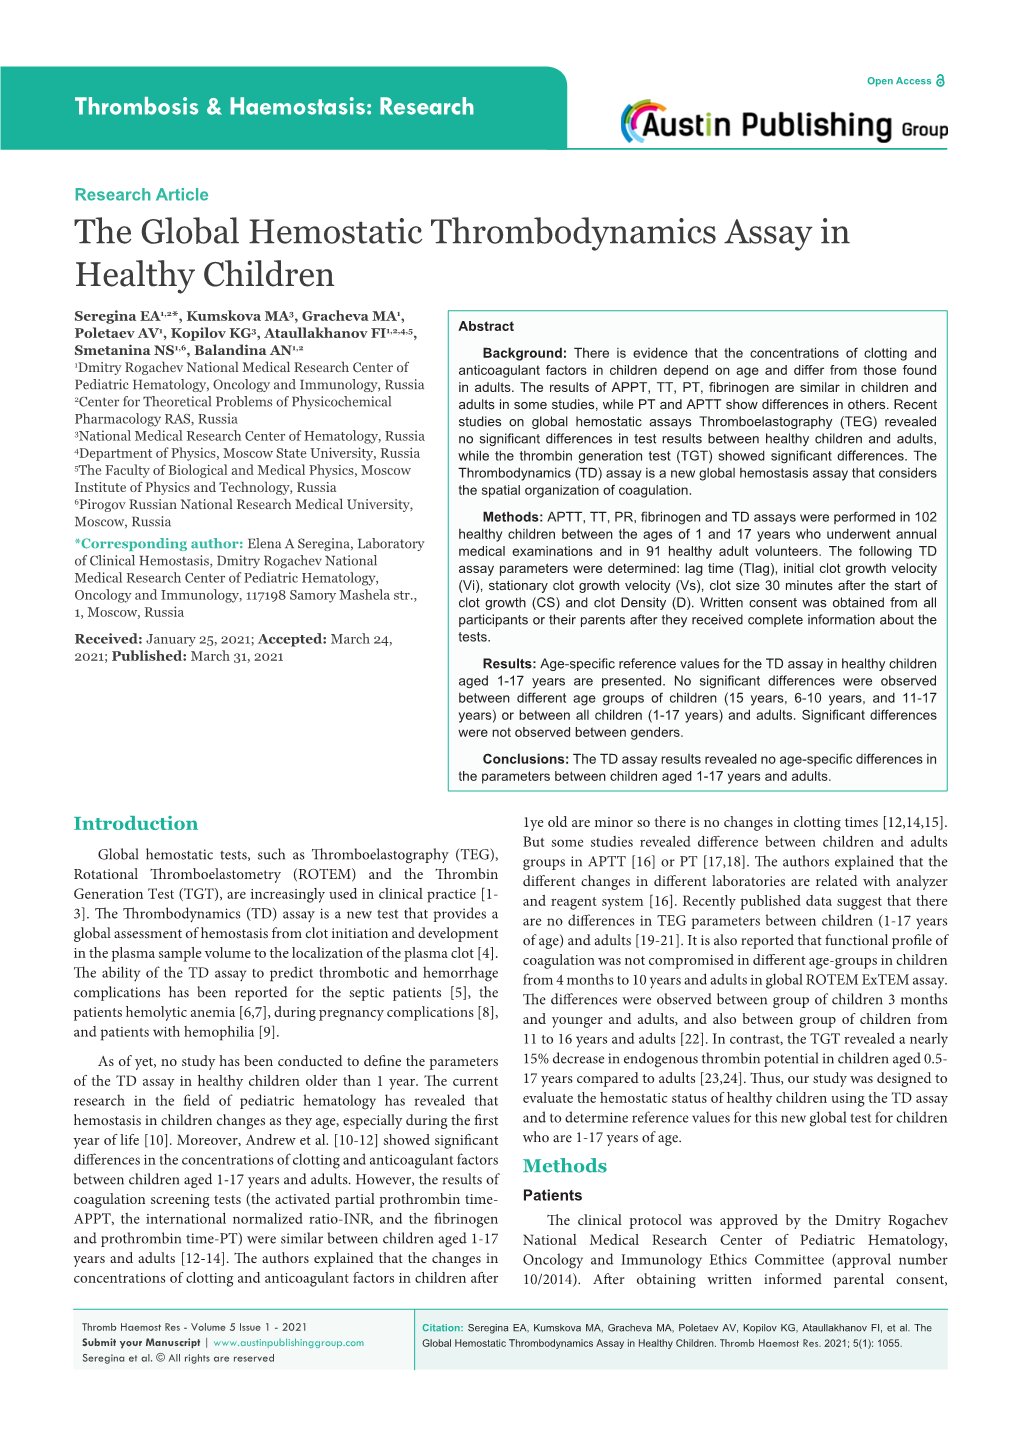 The Global Hemostatic Thrombodynamics Assay in Healthy Children